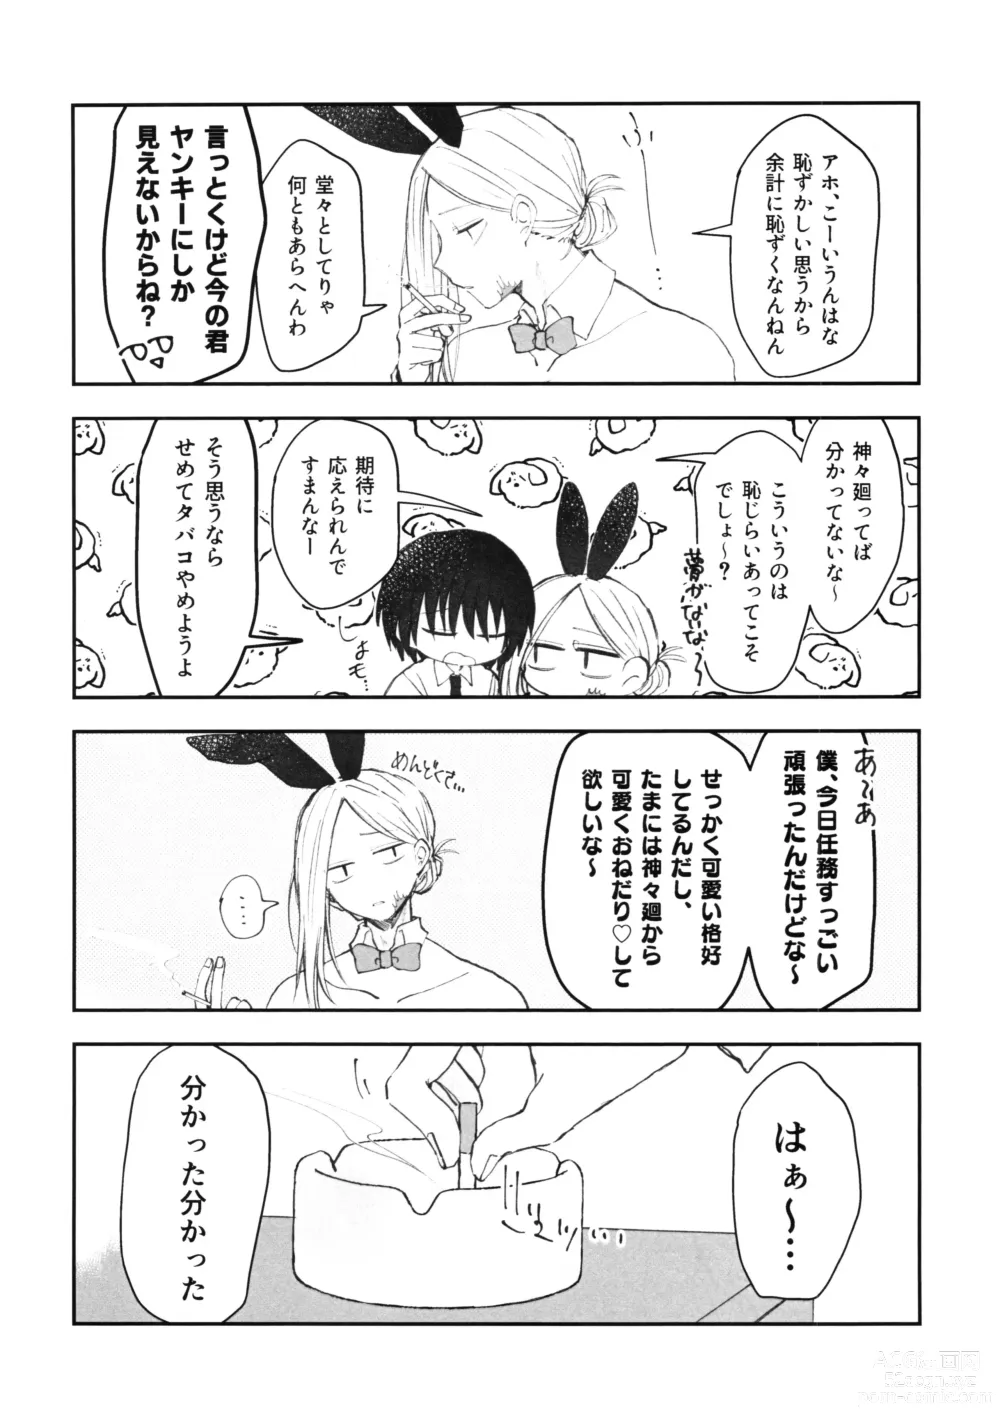 Page 25 of doujinshi NGSS LOG 1